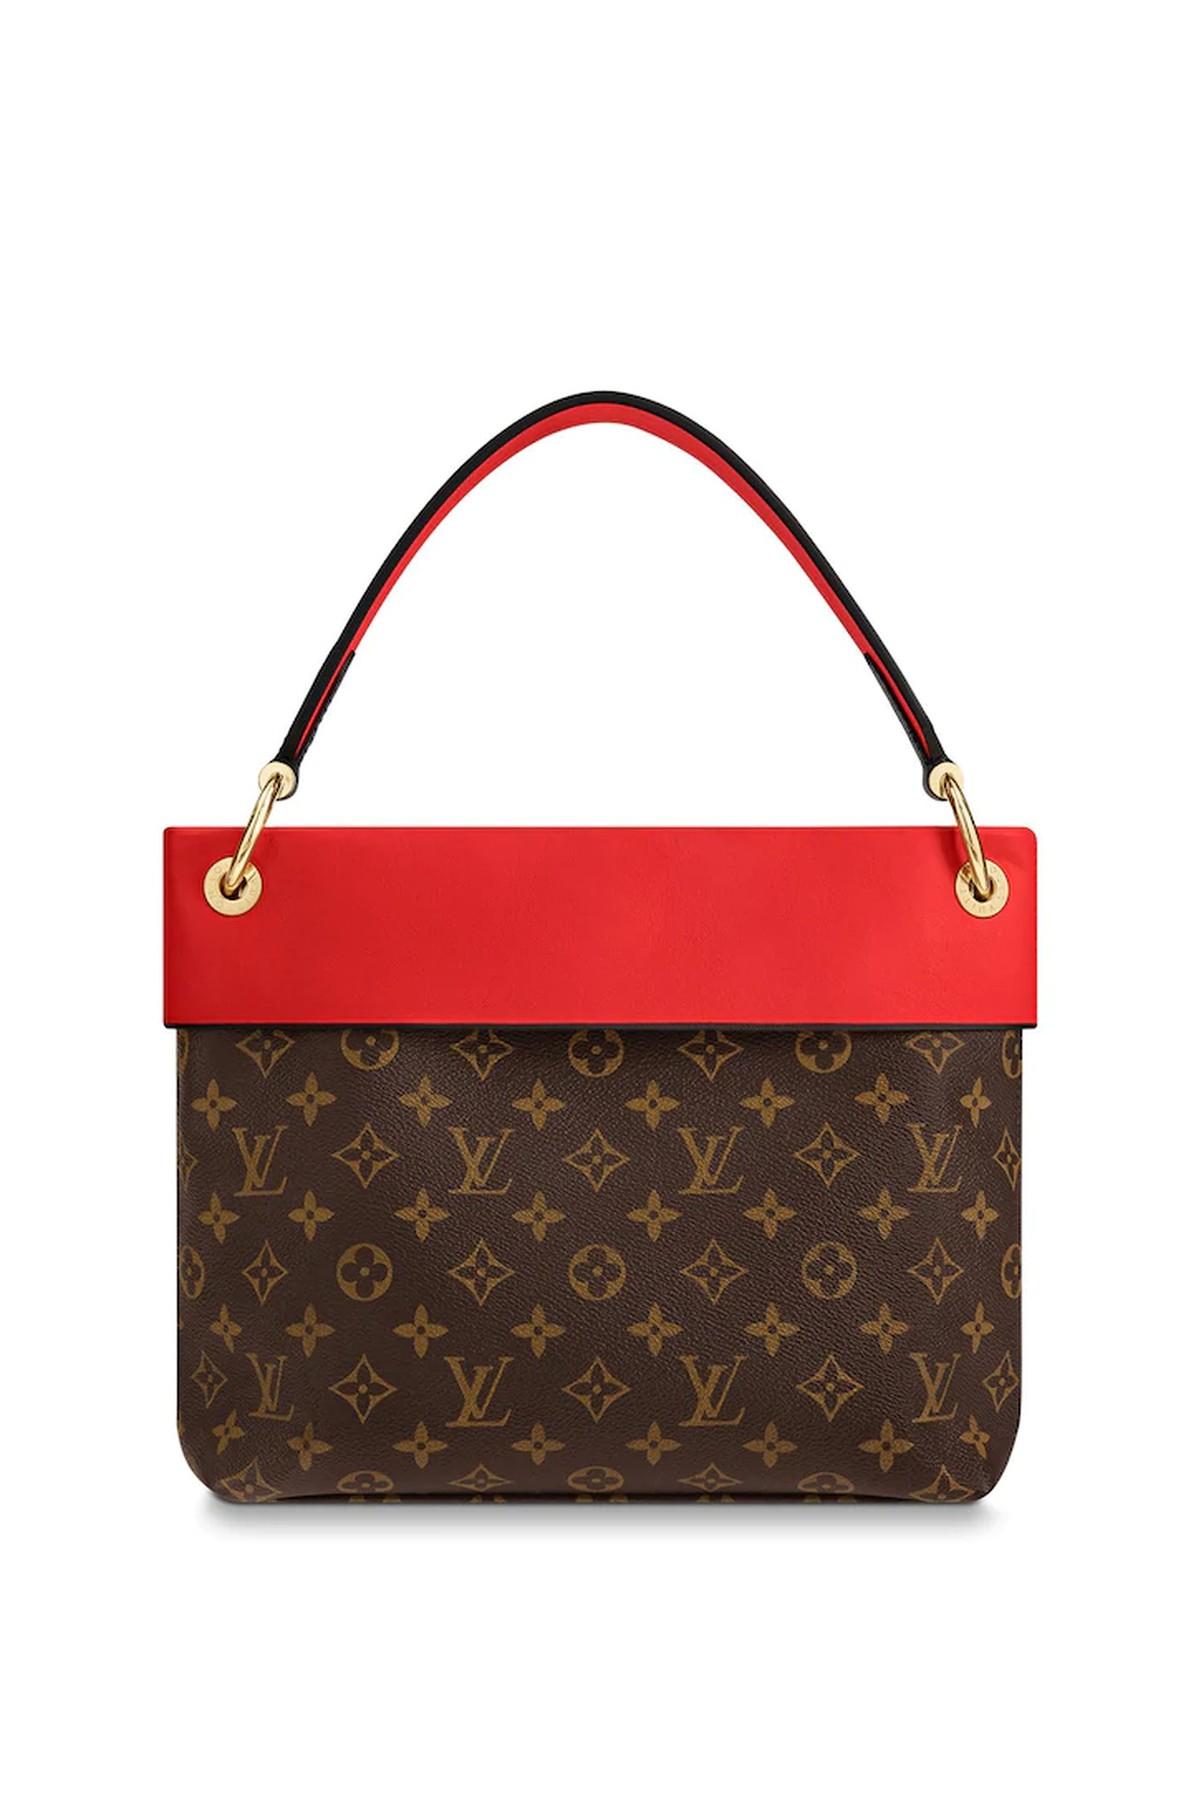 Tuileries leather handbag Louis Vuitton Multicolour in Leather